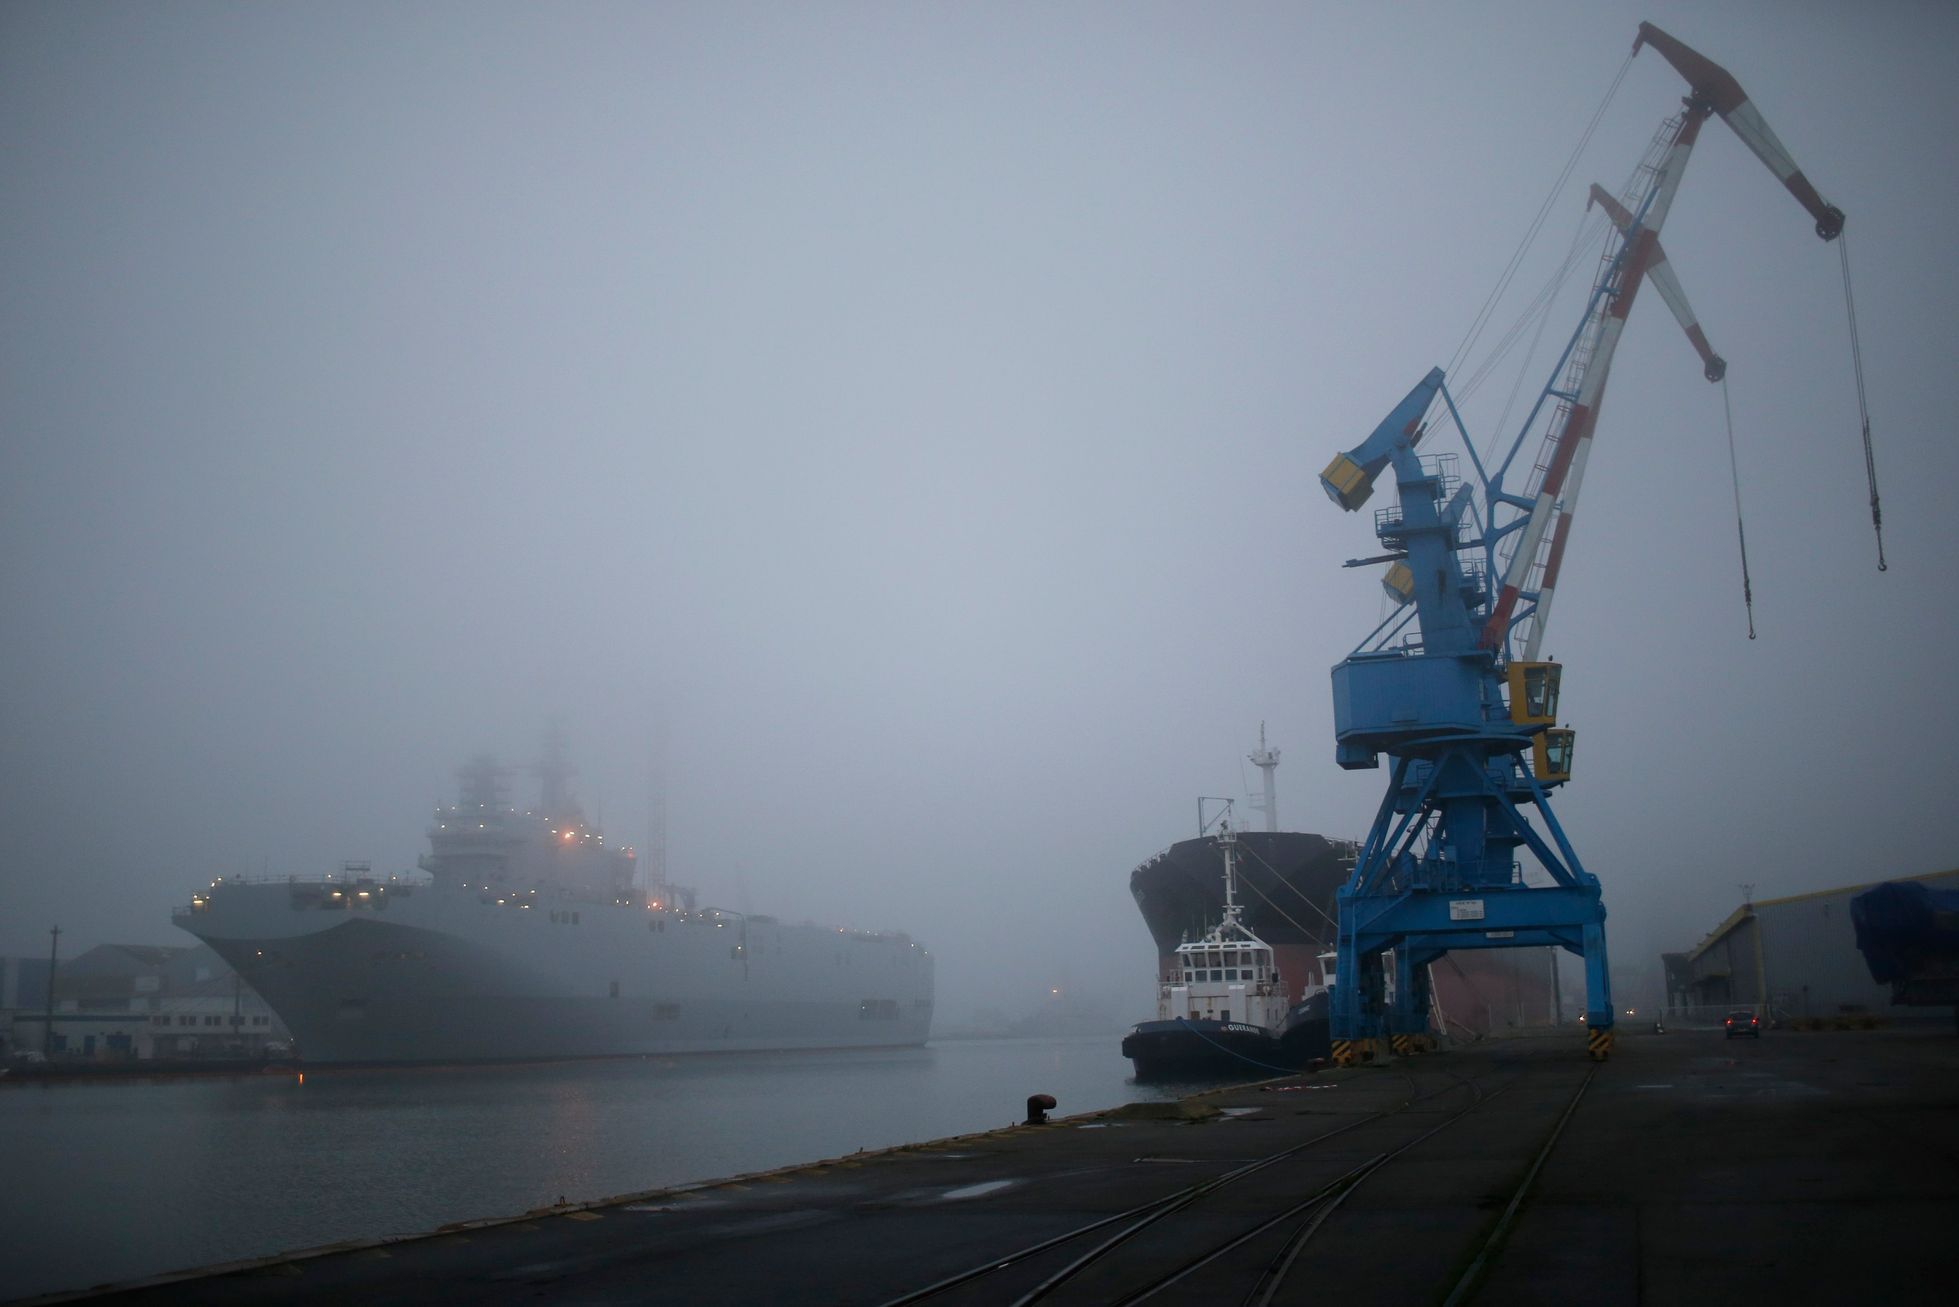 The Mistral-class helicopter carrier Sevastopol is seen at the STX Les Chantiers de l'Atlantique shipyard site in Saint-Nazaire